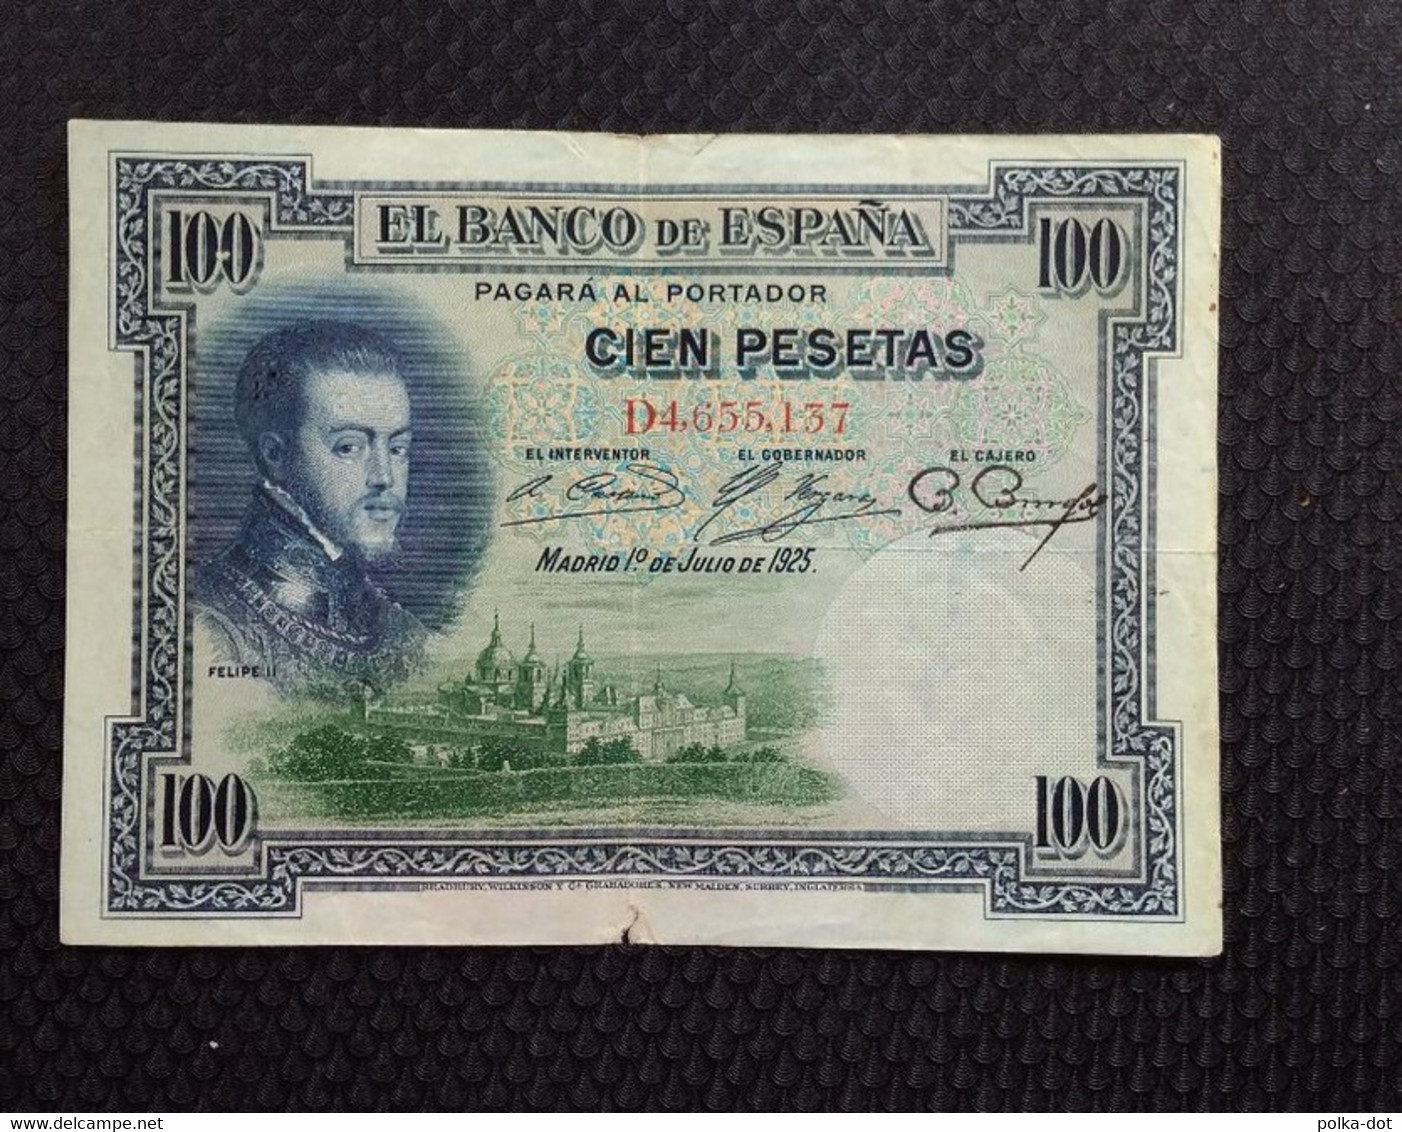 SPAIN 1925 BANK NOTE PAPER CURRENCY 100 PESETAS USED CONDITION AS SEEN - 100 Peseten